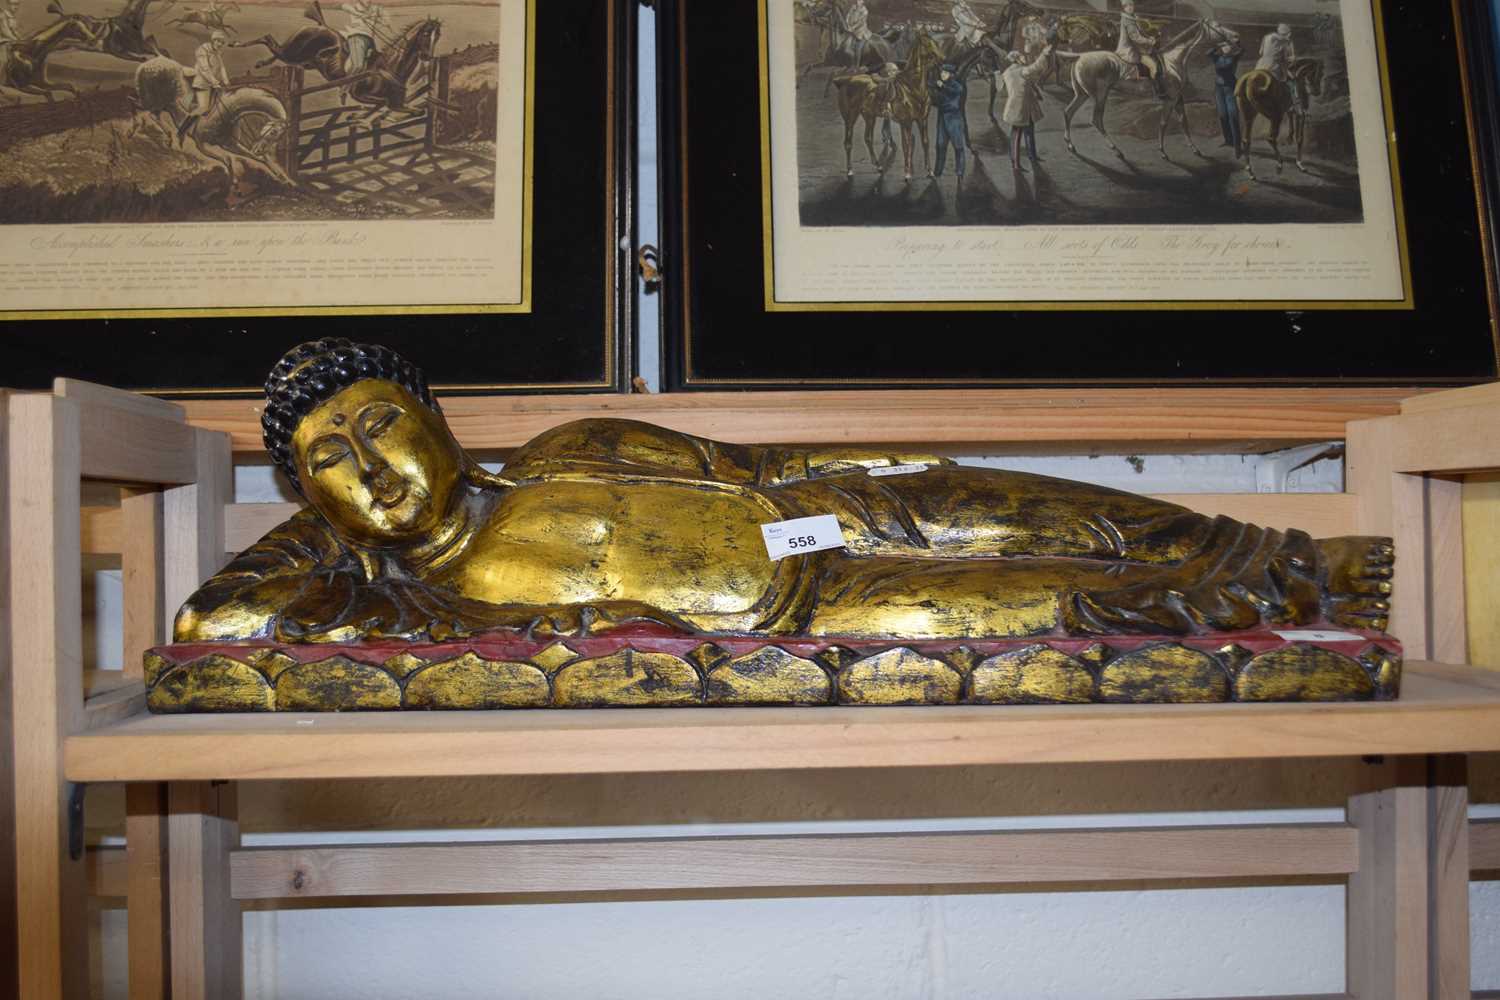 20th Century gilt wooden decorated Buddhist figure, 60cm long